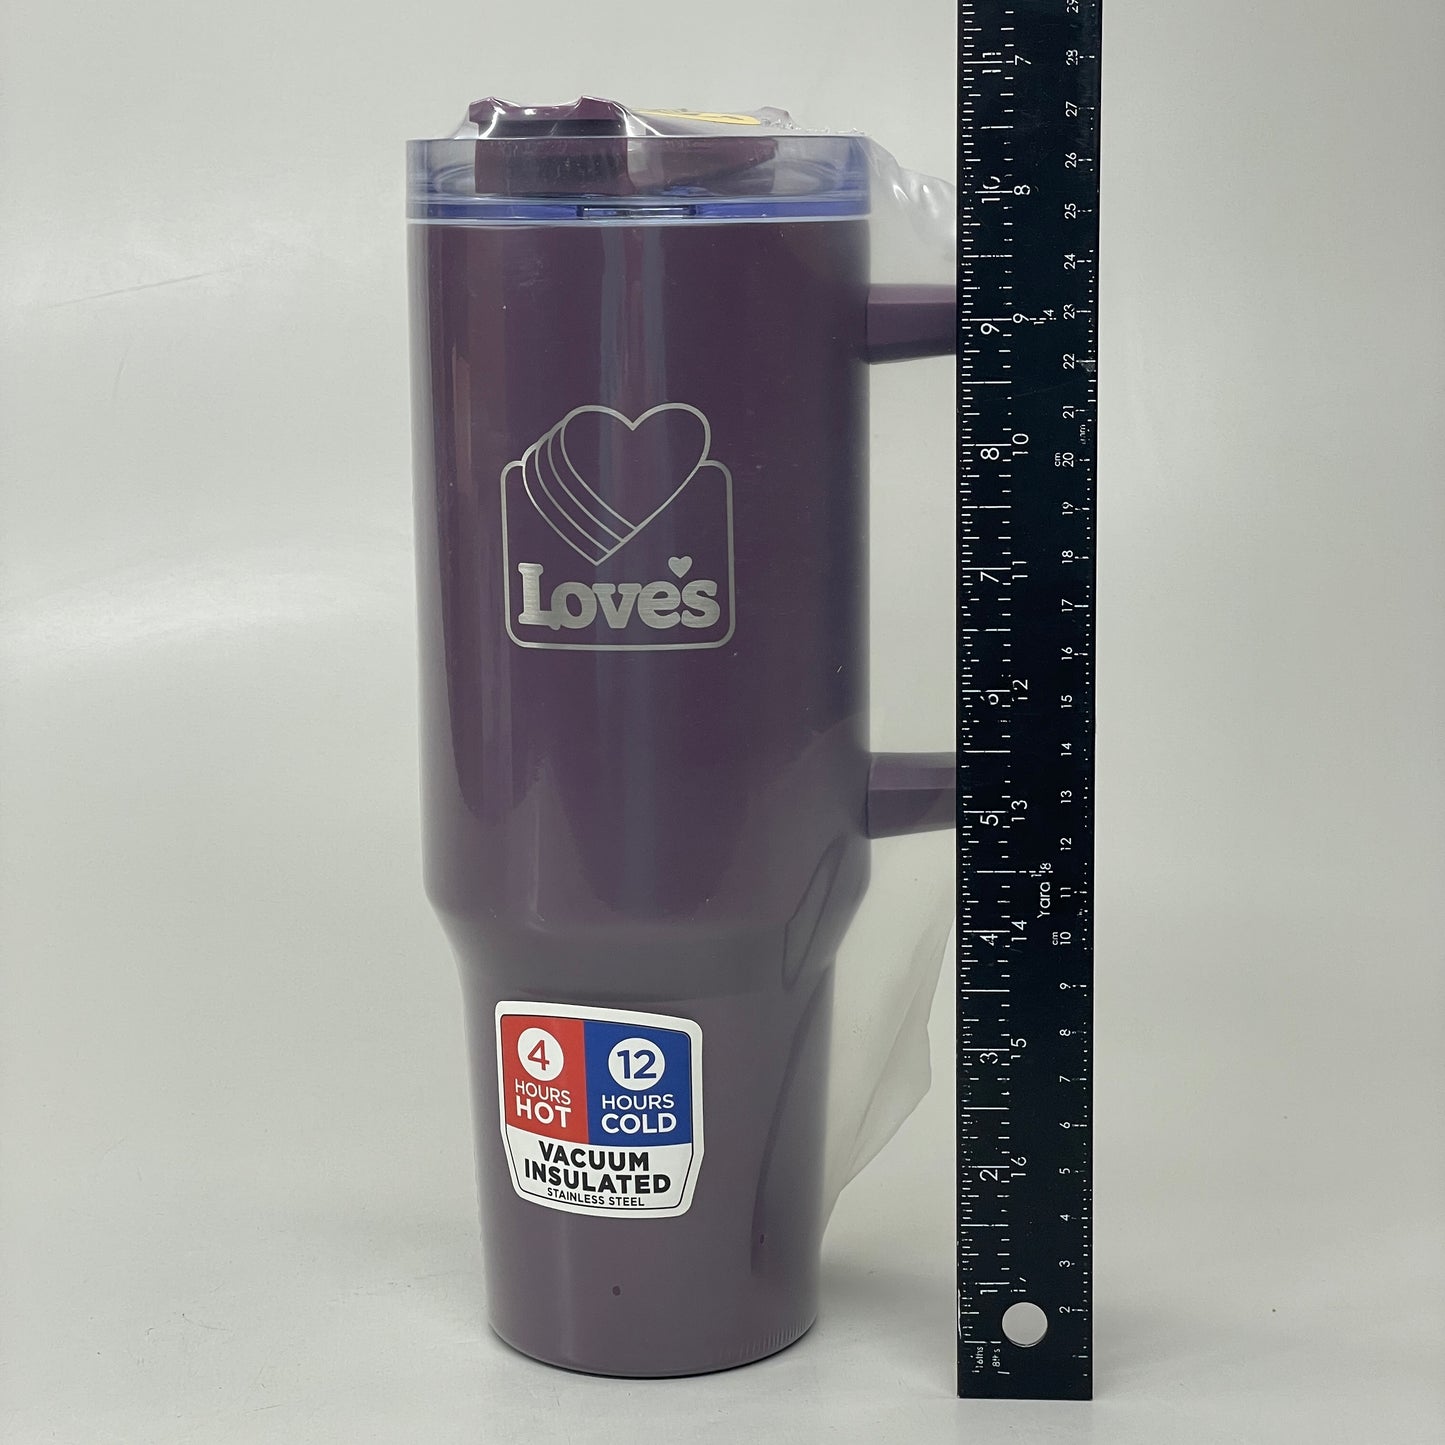 EASYGO DRINKWARE Love's Lake Vacuum Insulated Stainless Steel Mug 40oz Purple LKM-40